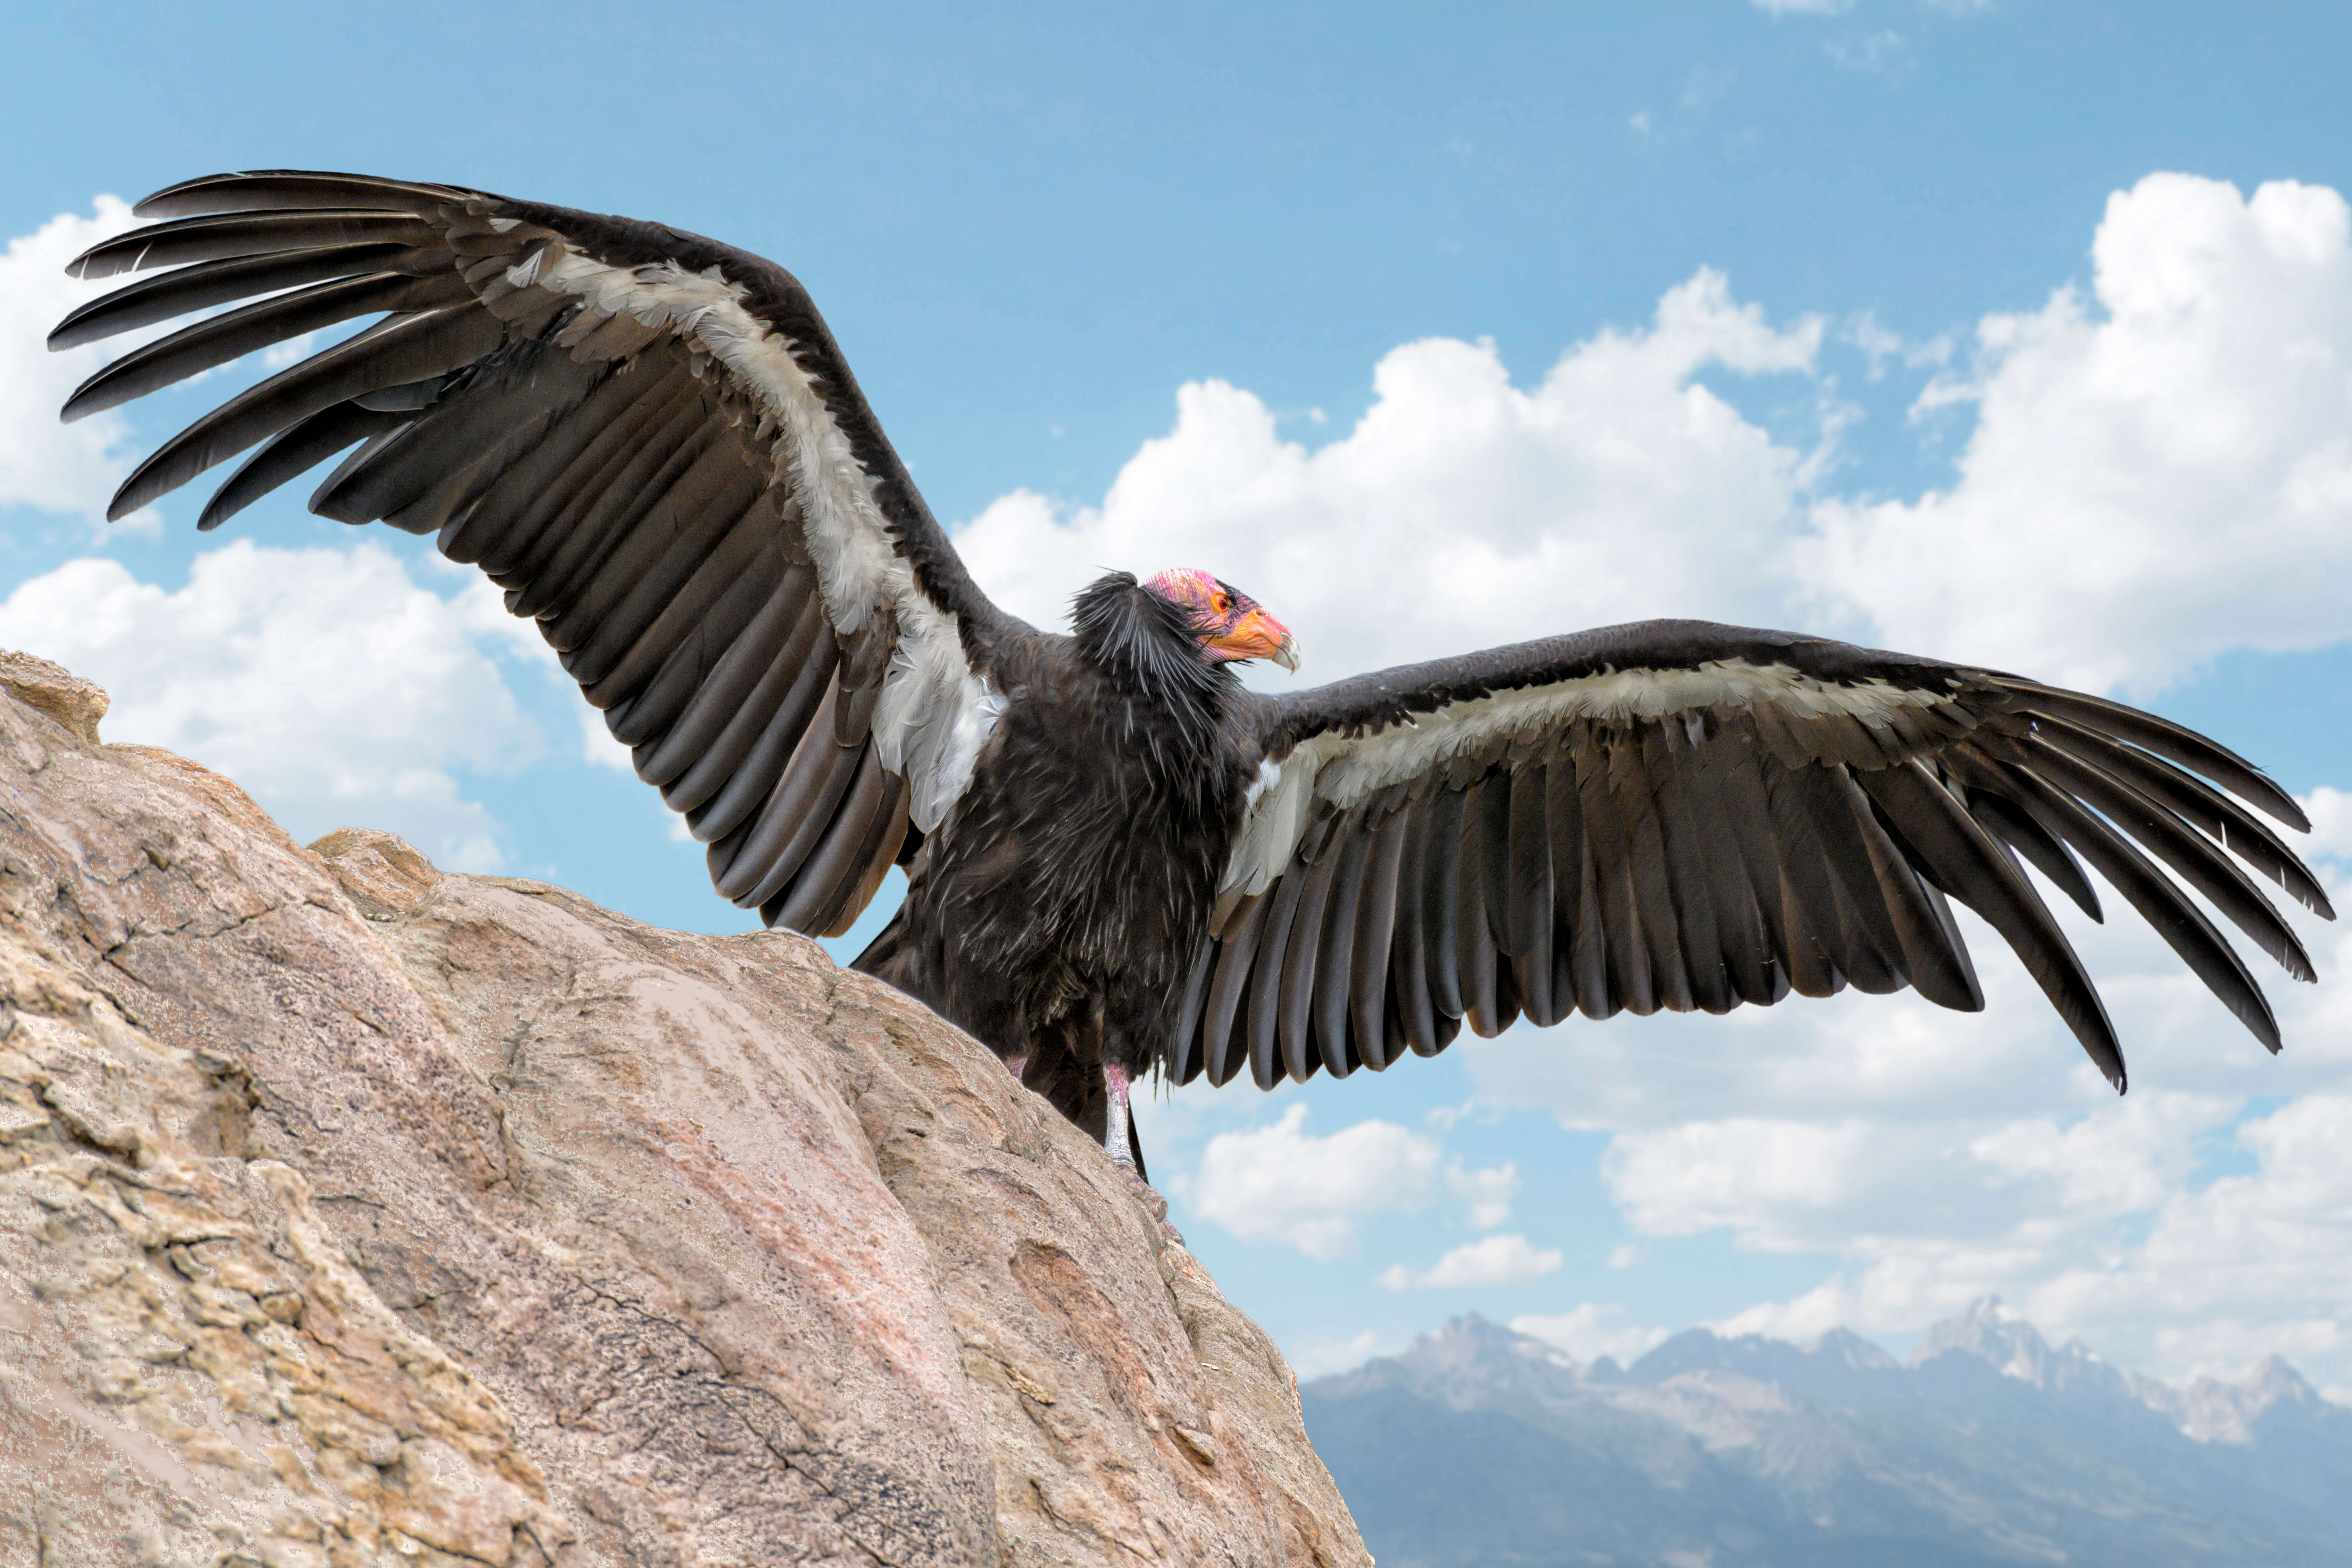 California condor showing off his wings